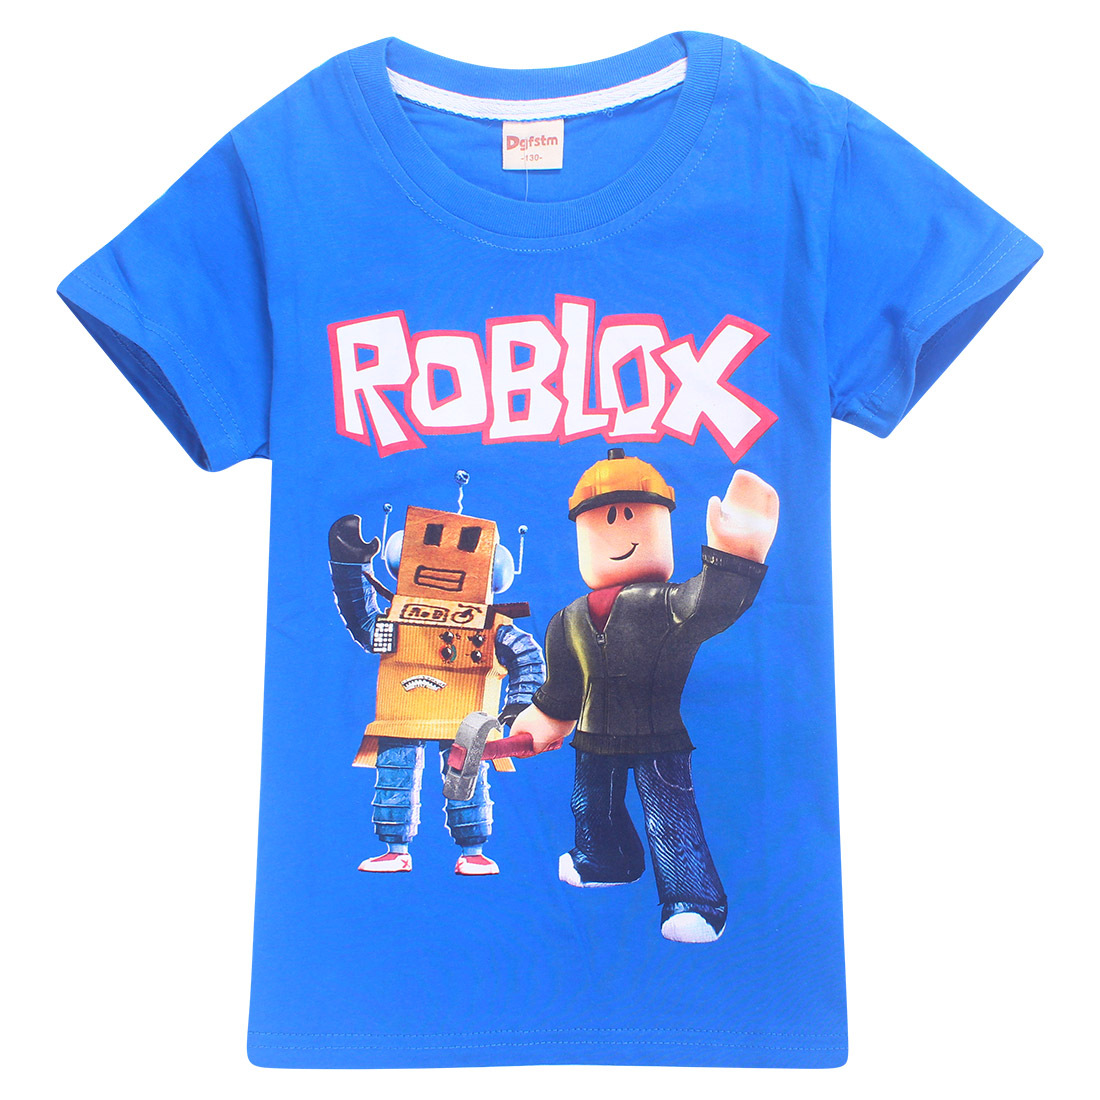 Roblox T Shirts For Kids Eyegemix Com - t shirt roblox outerwear jacket png clipart blouse blue